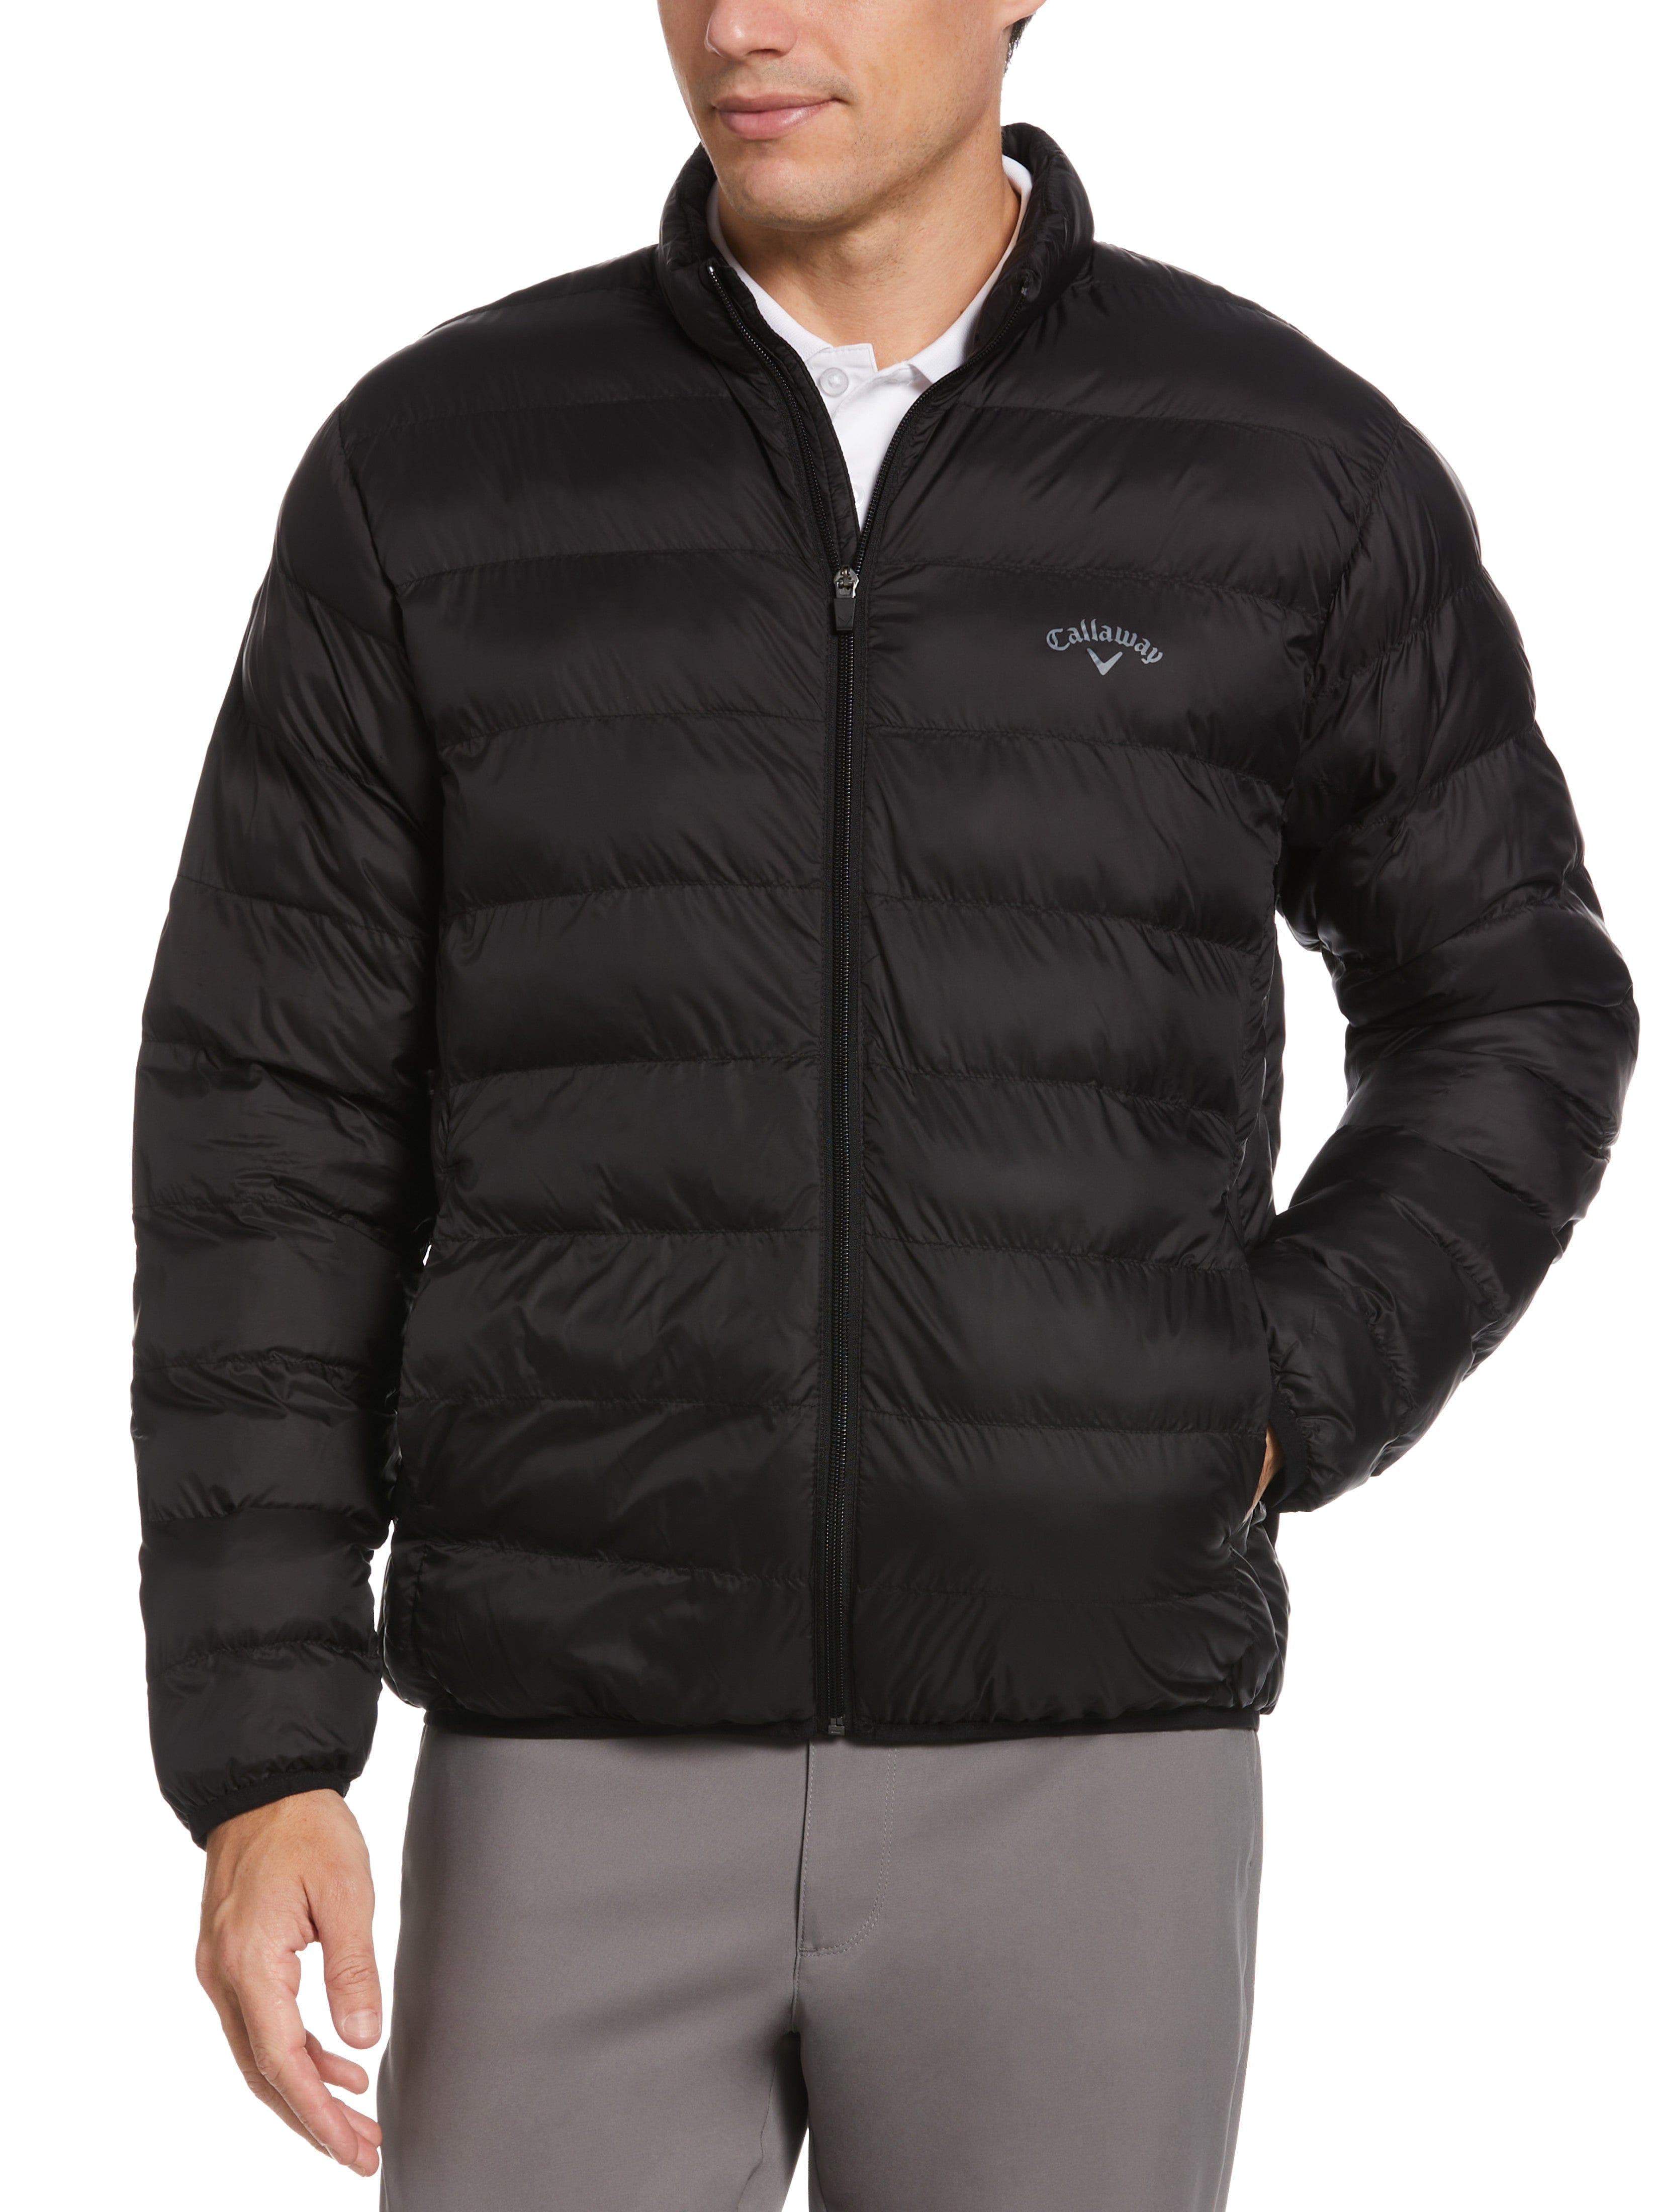 Callaway Apparel Mens Puffer Jacket Top, Size XL, Black, 100% Nylon | Golf Apparel Shop